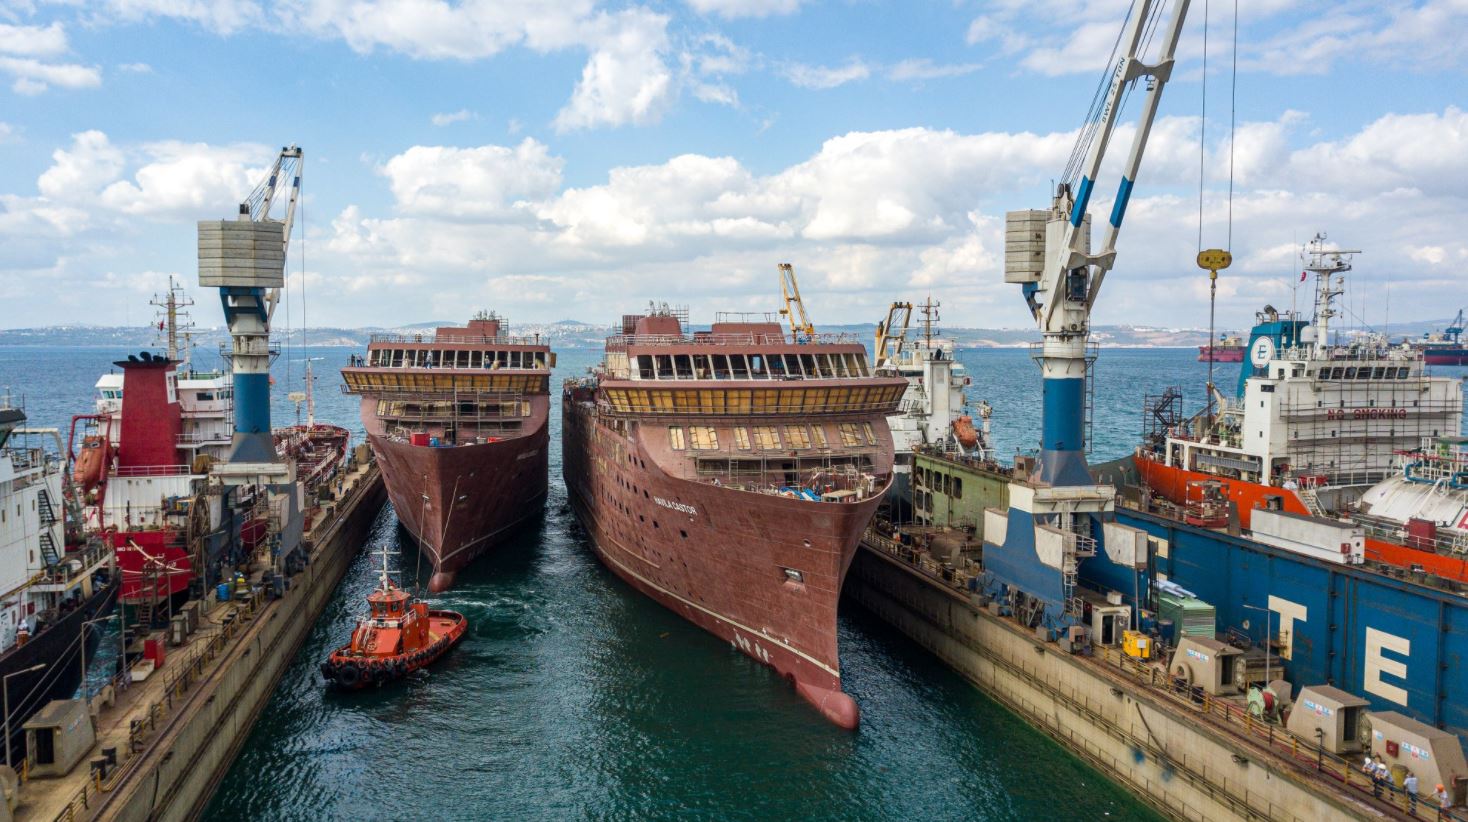 Tersan launches Havila's LNG-powered cruise ships